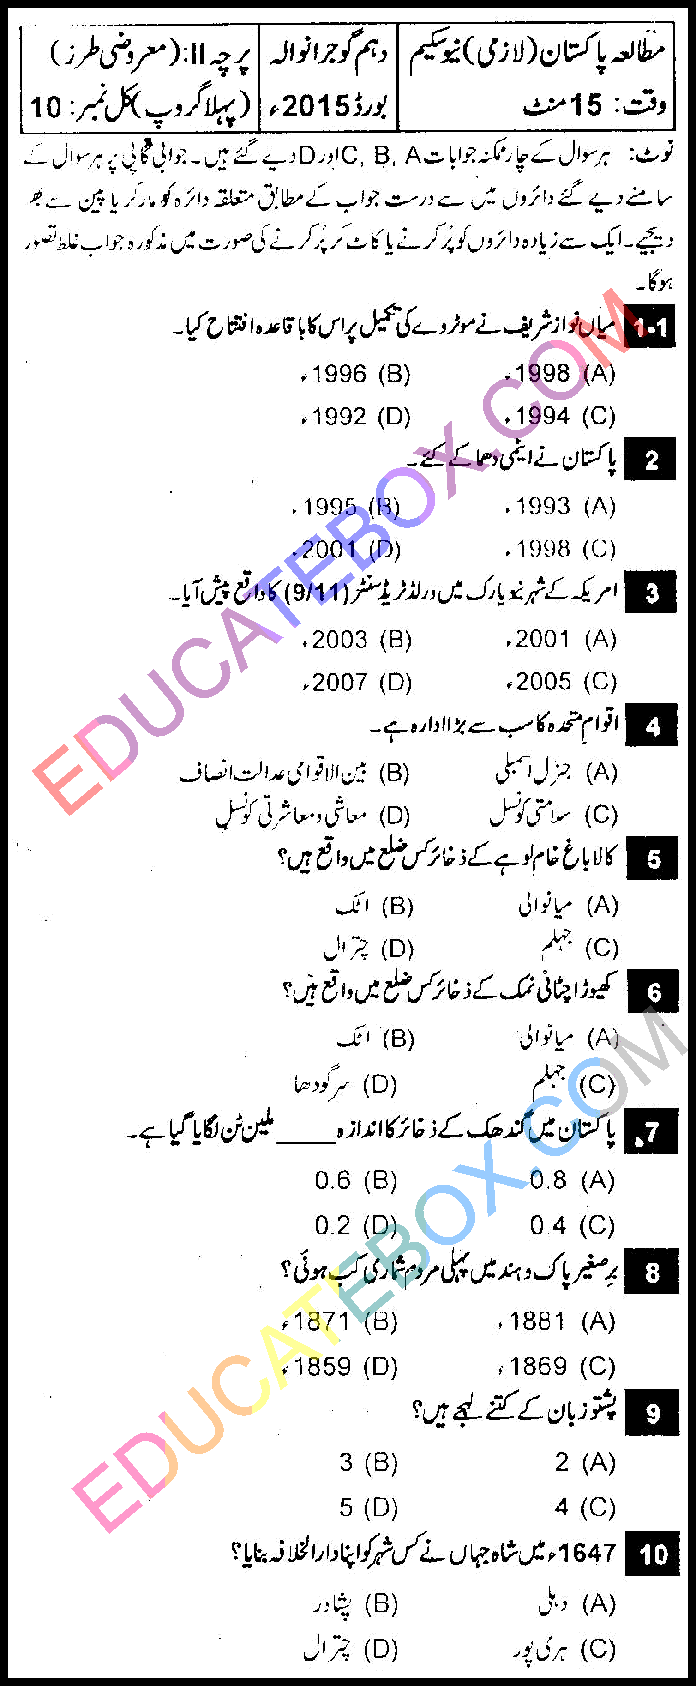 Past Paper 10th Class Pakistan Study Gujranwala Board 2015 Group 1 Objective Type اپ ٹو ڈیٹ پیپر مطالعہ پاکستان 2015 پہلا گروپ جماعت دہم گوجرانوالہ بورڈ معروضی طرز